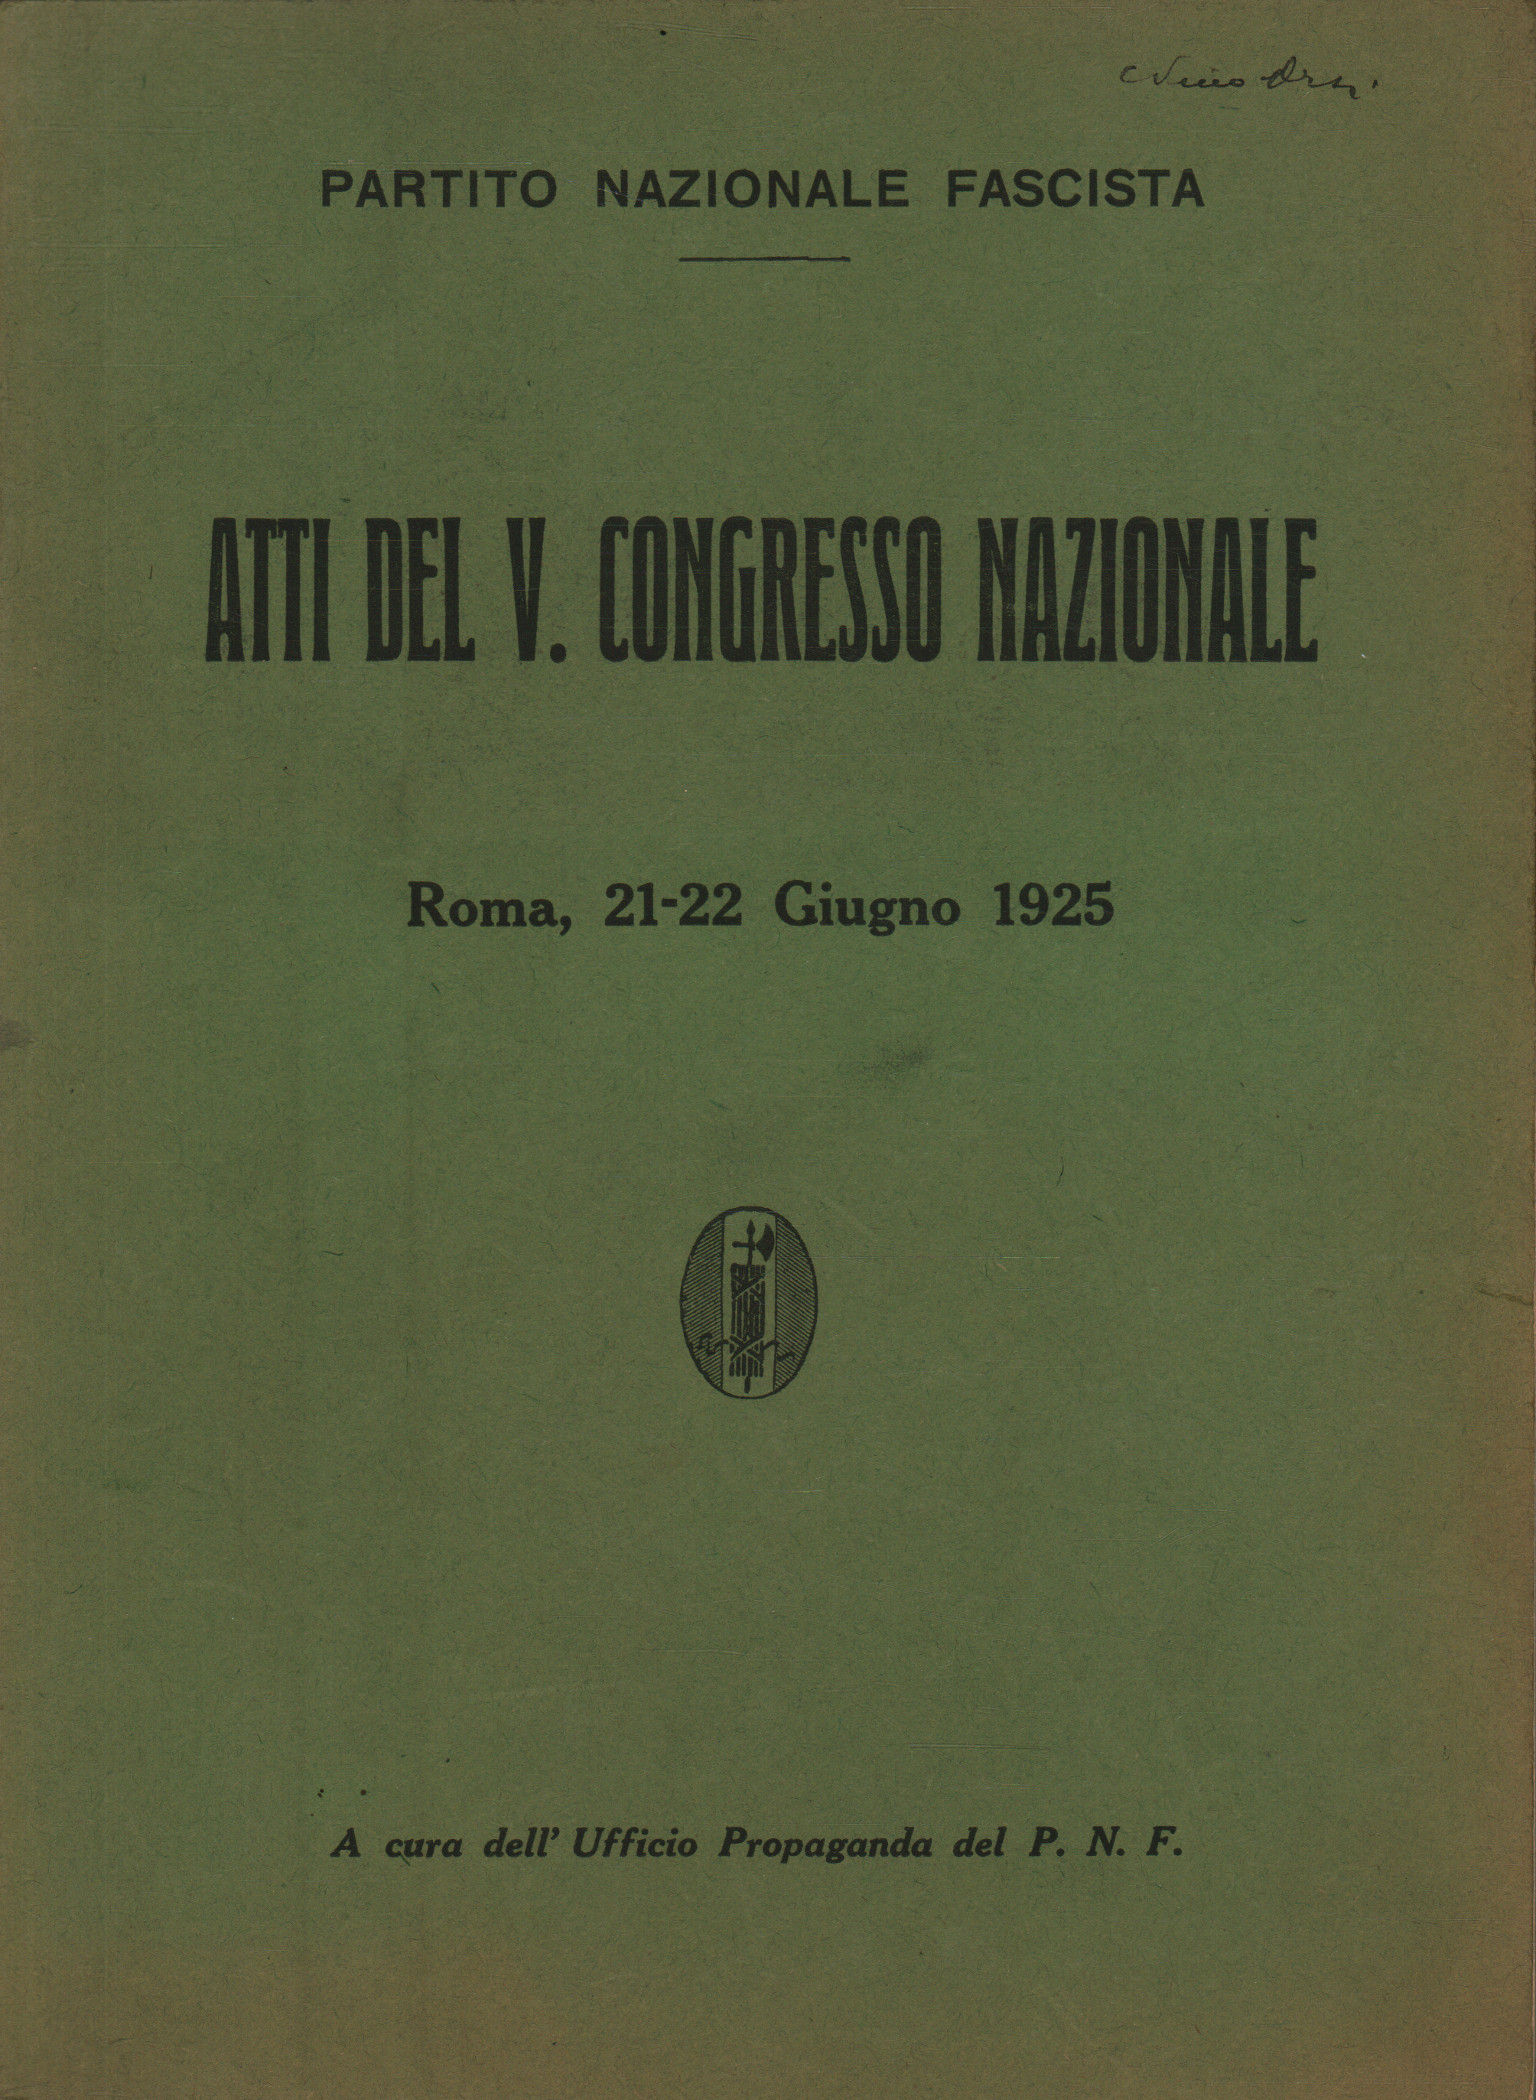 Proceedings des 5. Nationalkongresses